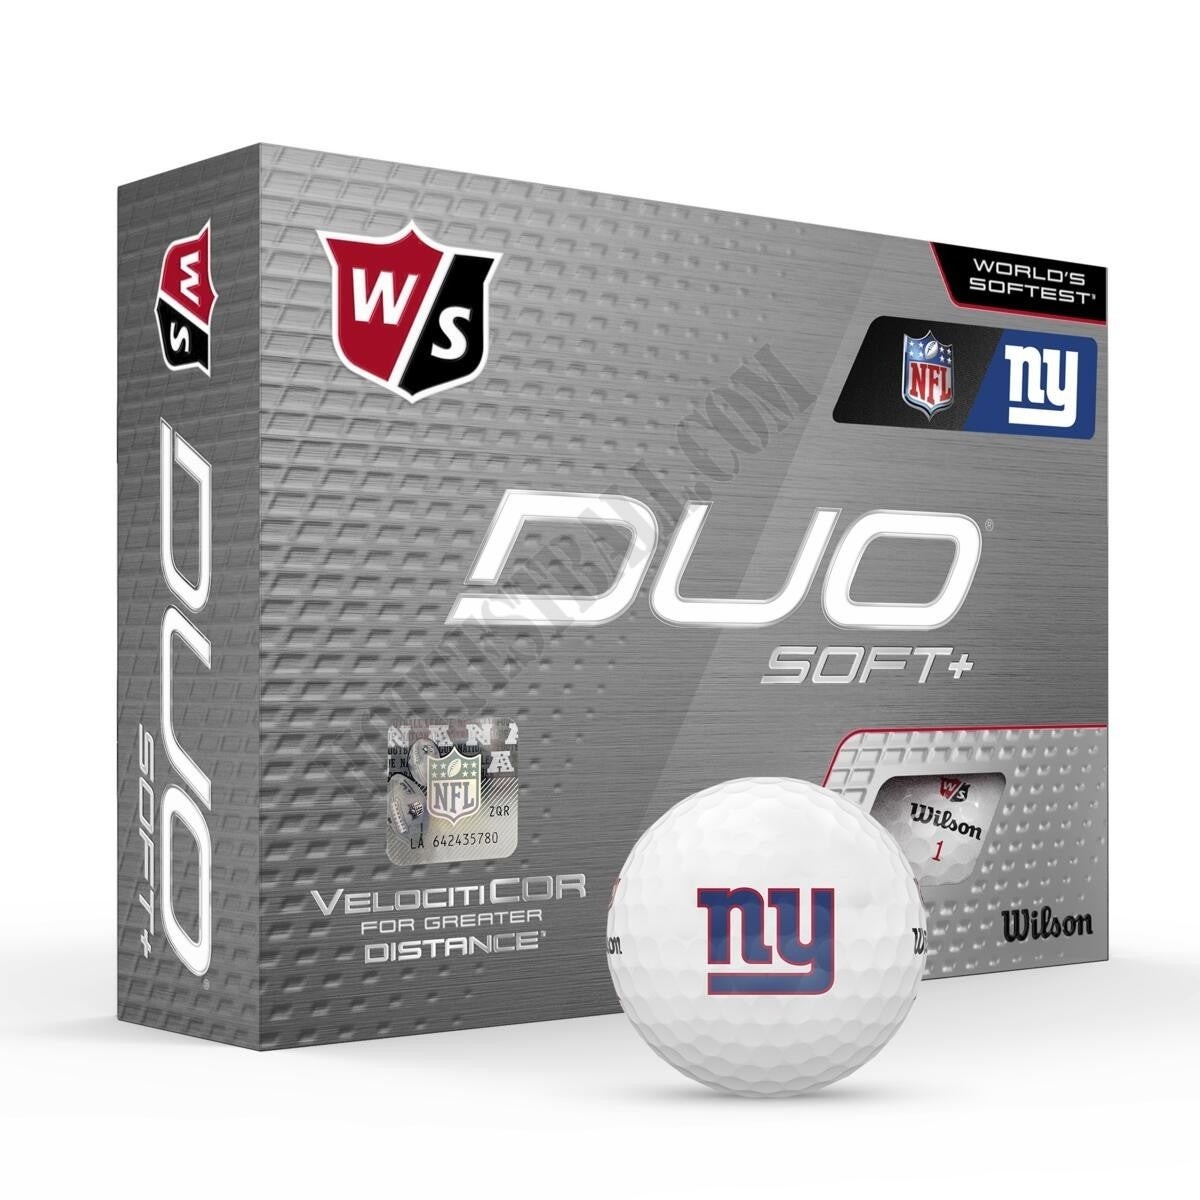 NFL Duke Replica Football Bundle - Pick Your Team - Wilson Discount Store - -2